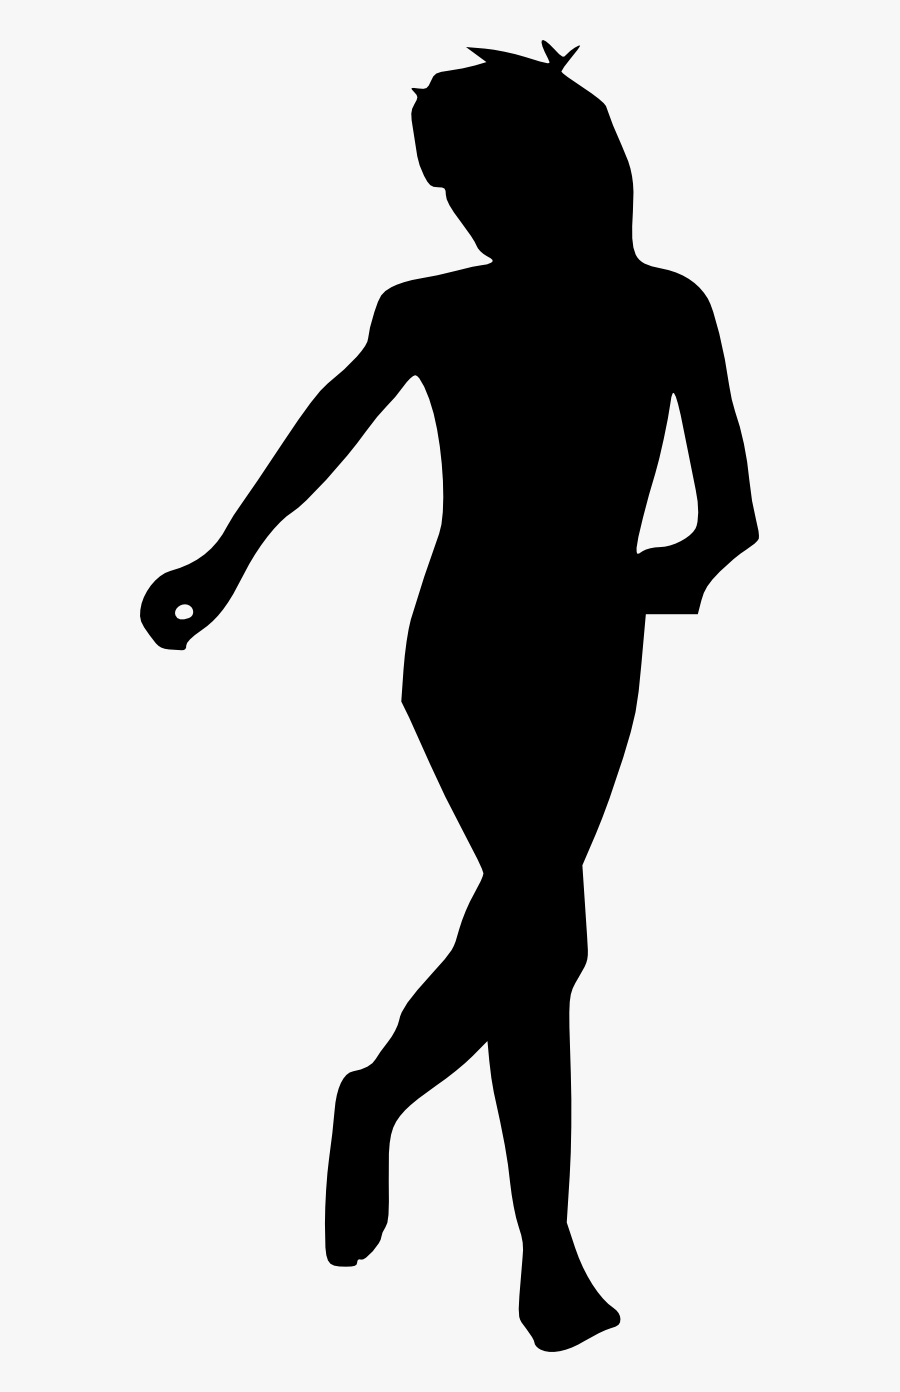 Man Running Silhouette Png - Running Silhoutte Png, Transparent Clipart